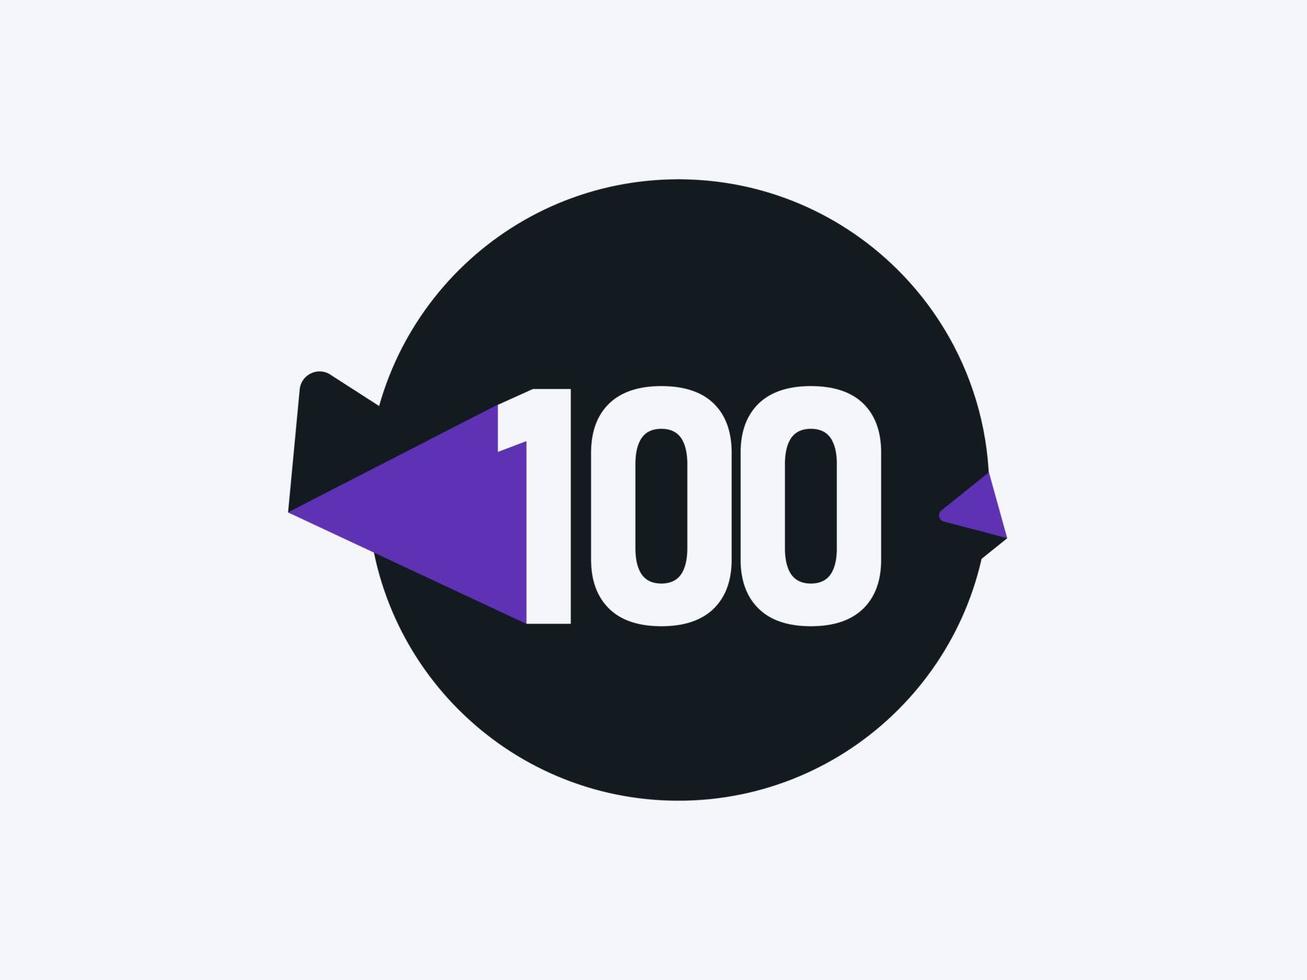 100 Number logo icon design vector image. Number logo icon design vector image